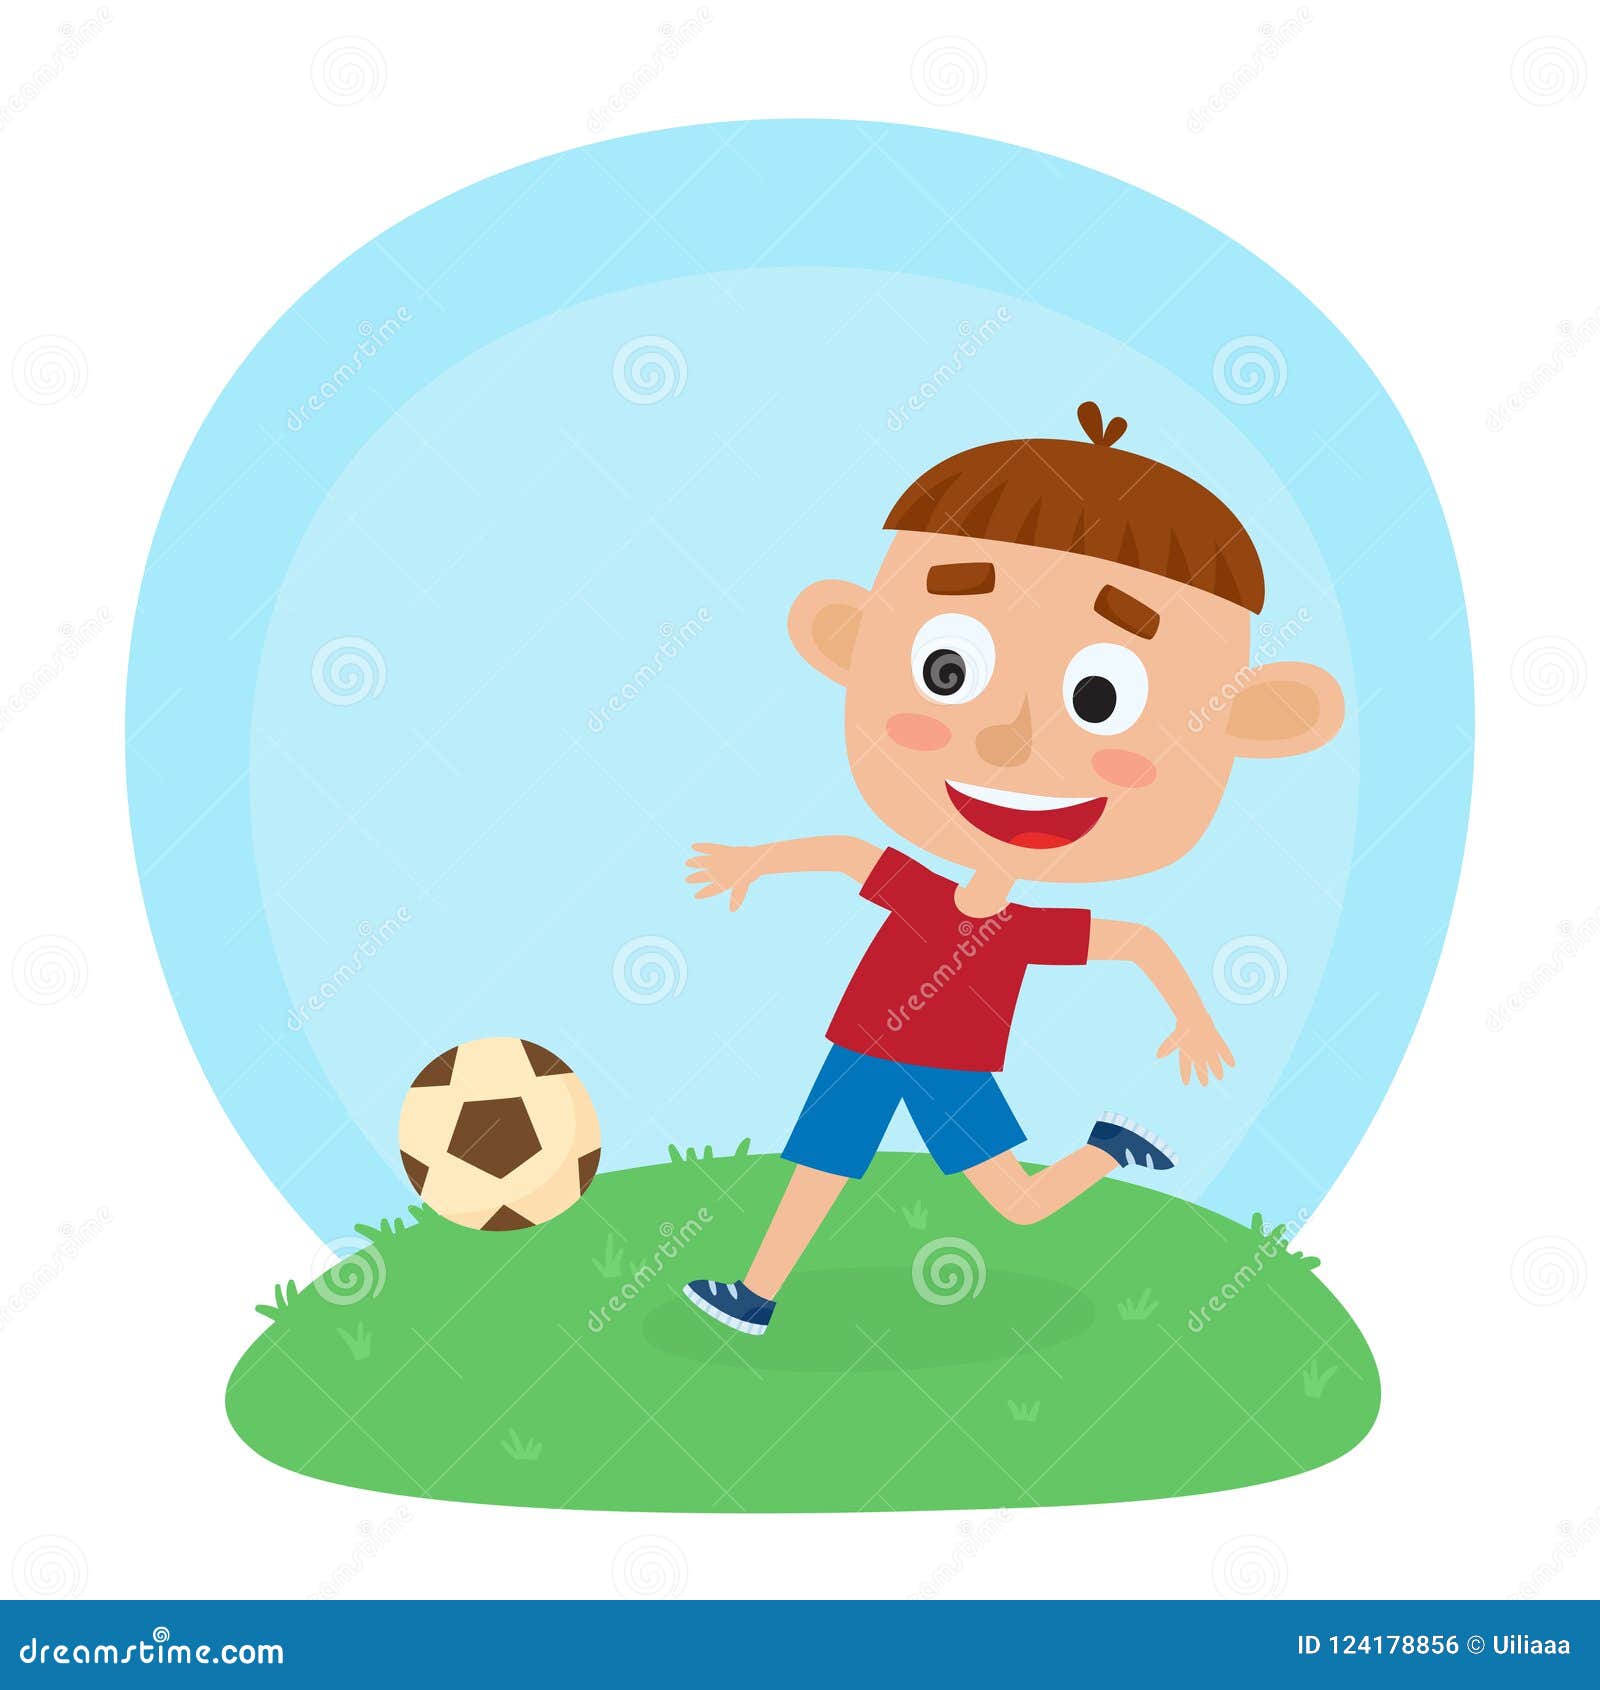 boy kicking ball clipart blue